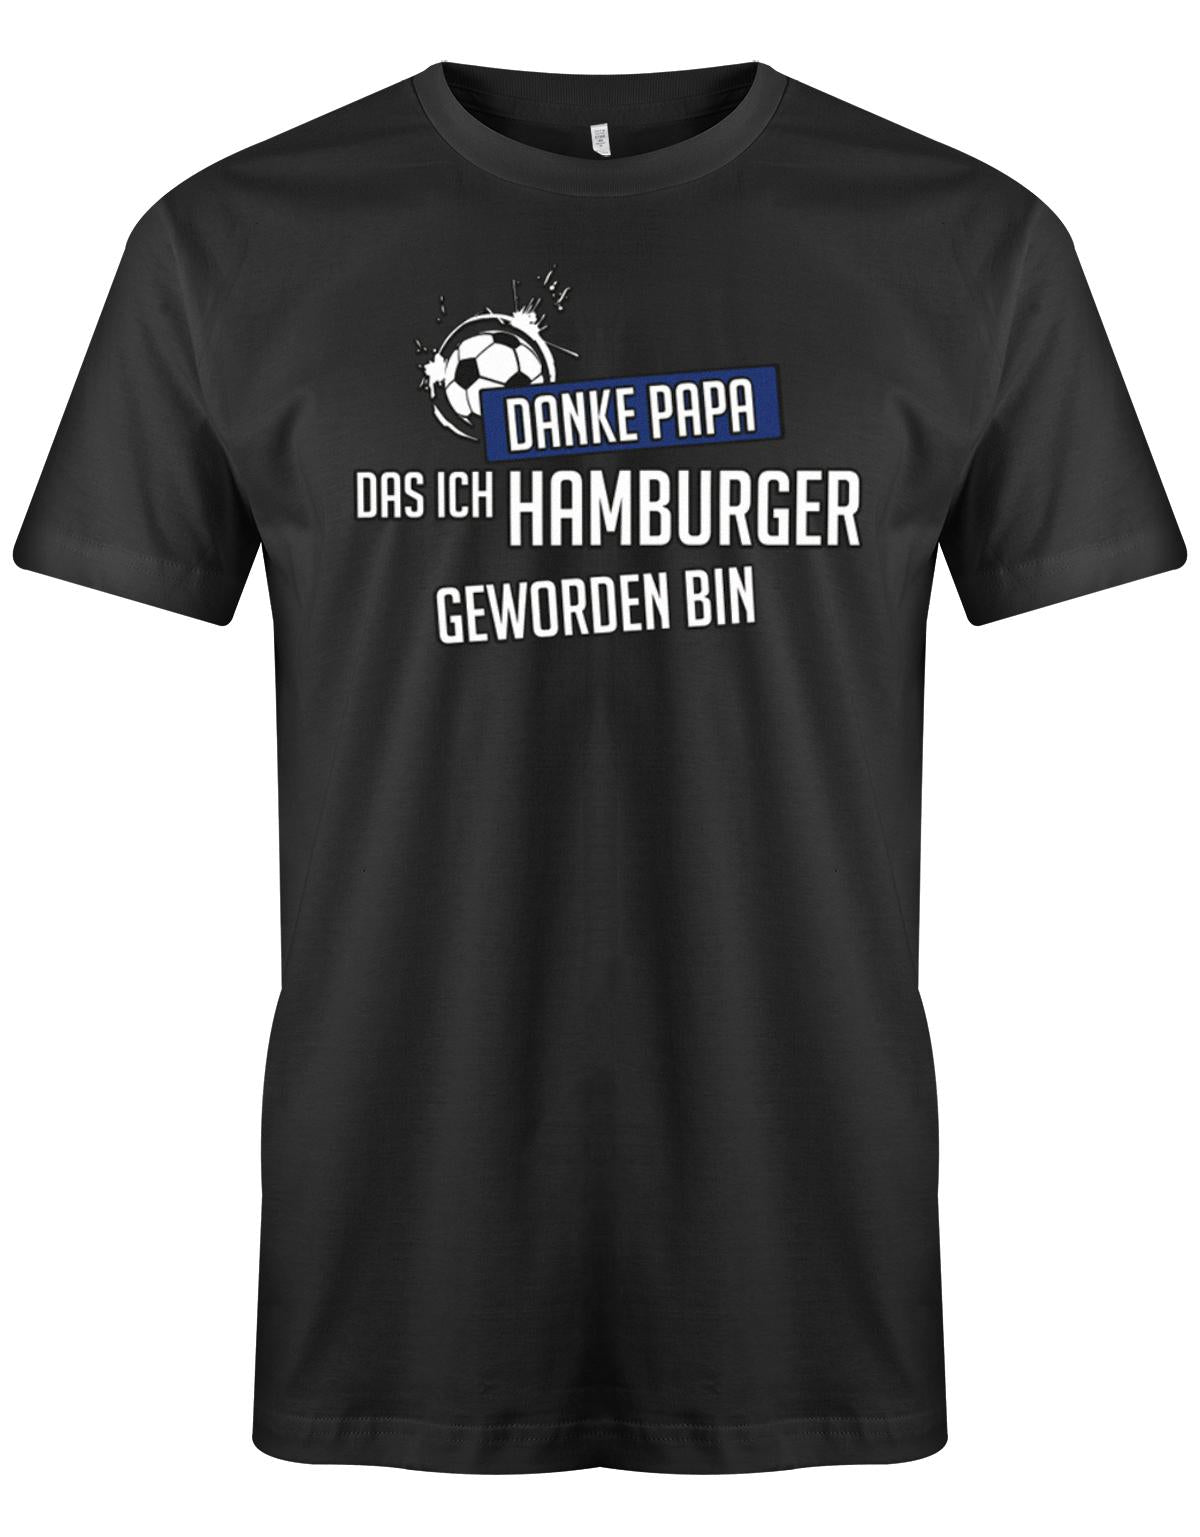 Danke-papa-das-ich-Hamburger-geworden-Hamburg-shirt-herren-Schwarz